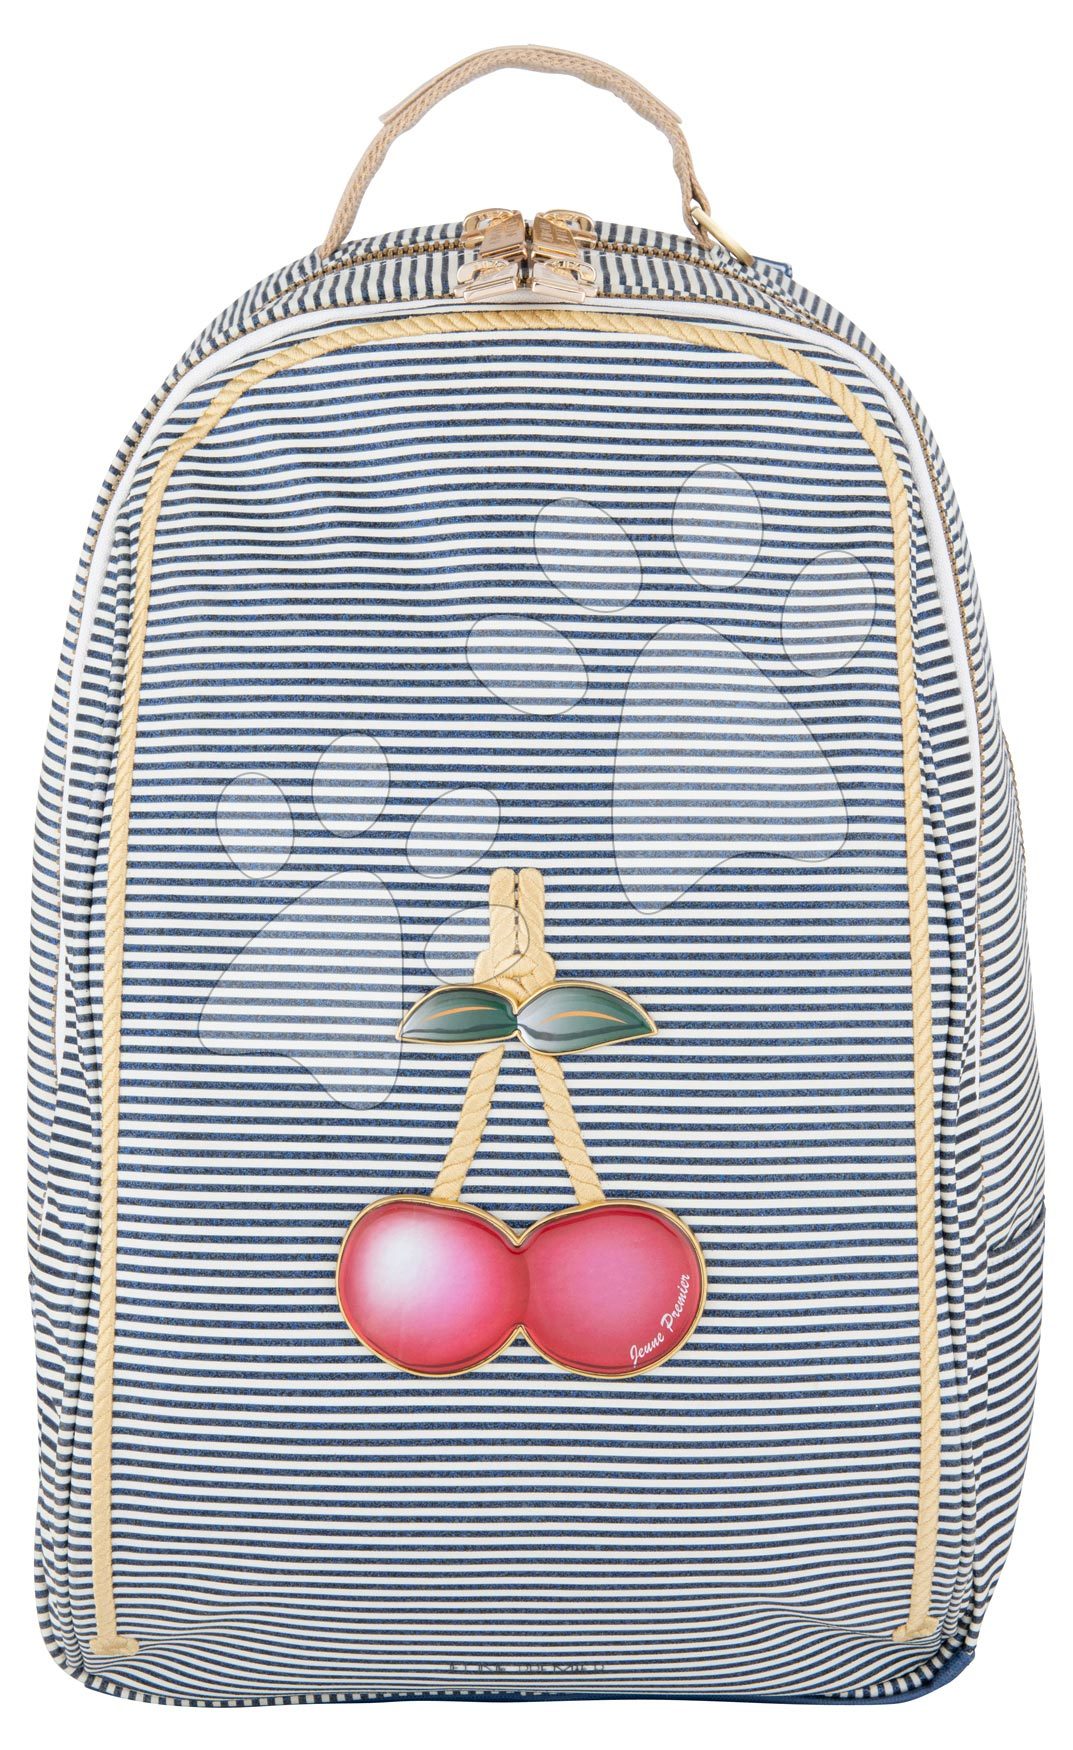 Školské tašky a batohy - Školská taška batoh Backpack James Glazed Cherry Jeune Premier ergonomický luxusné prevedenie 42*30 cm